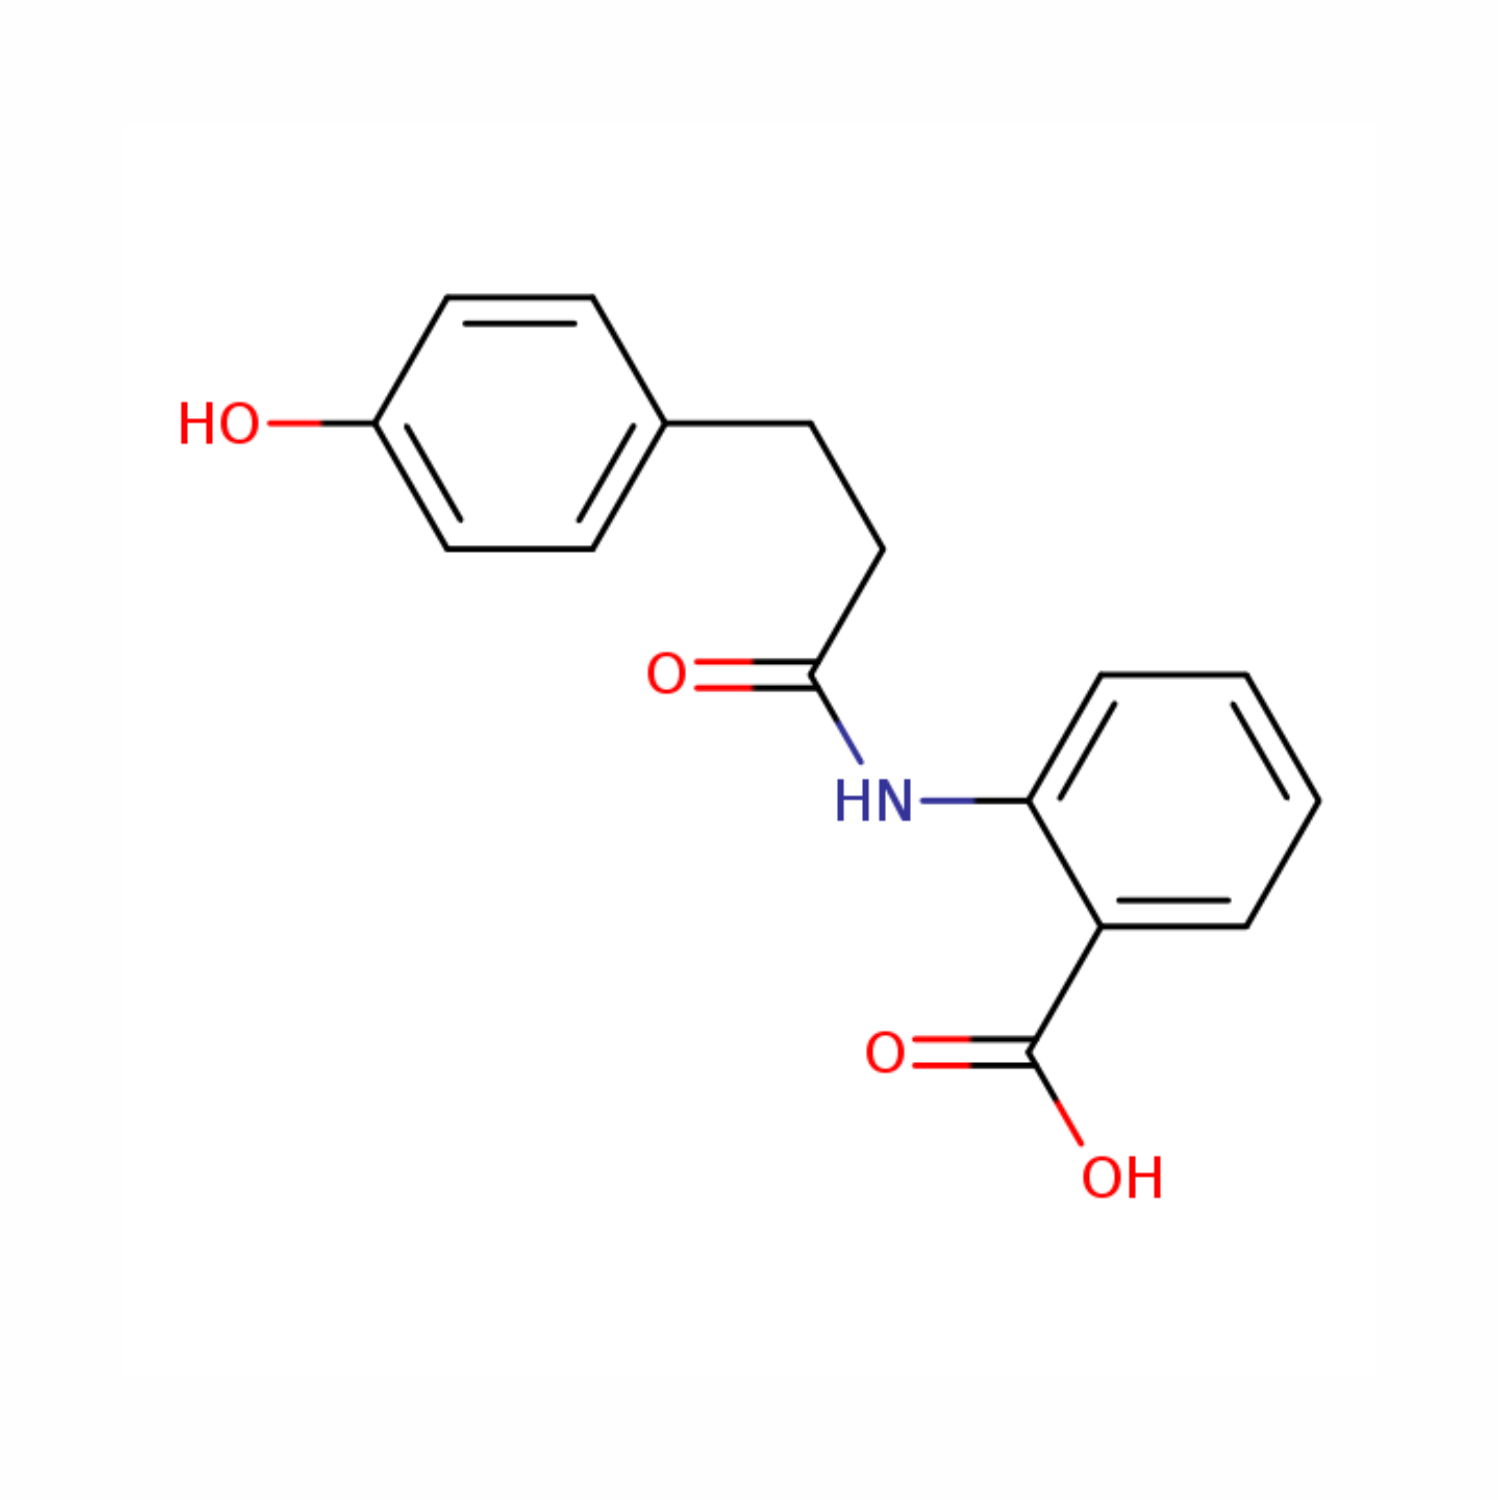 Hydroxyphenyl Propamidobenzoic Acid: The Humble Hero of Hydration